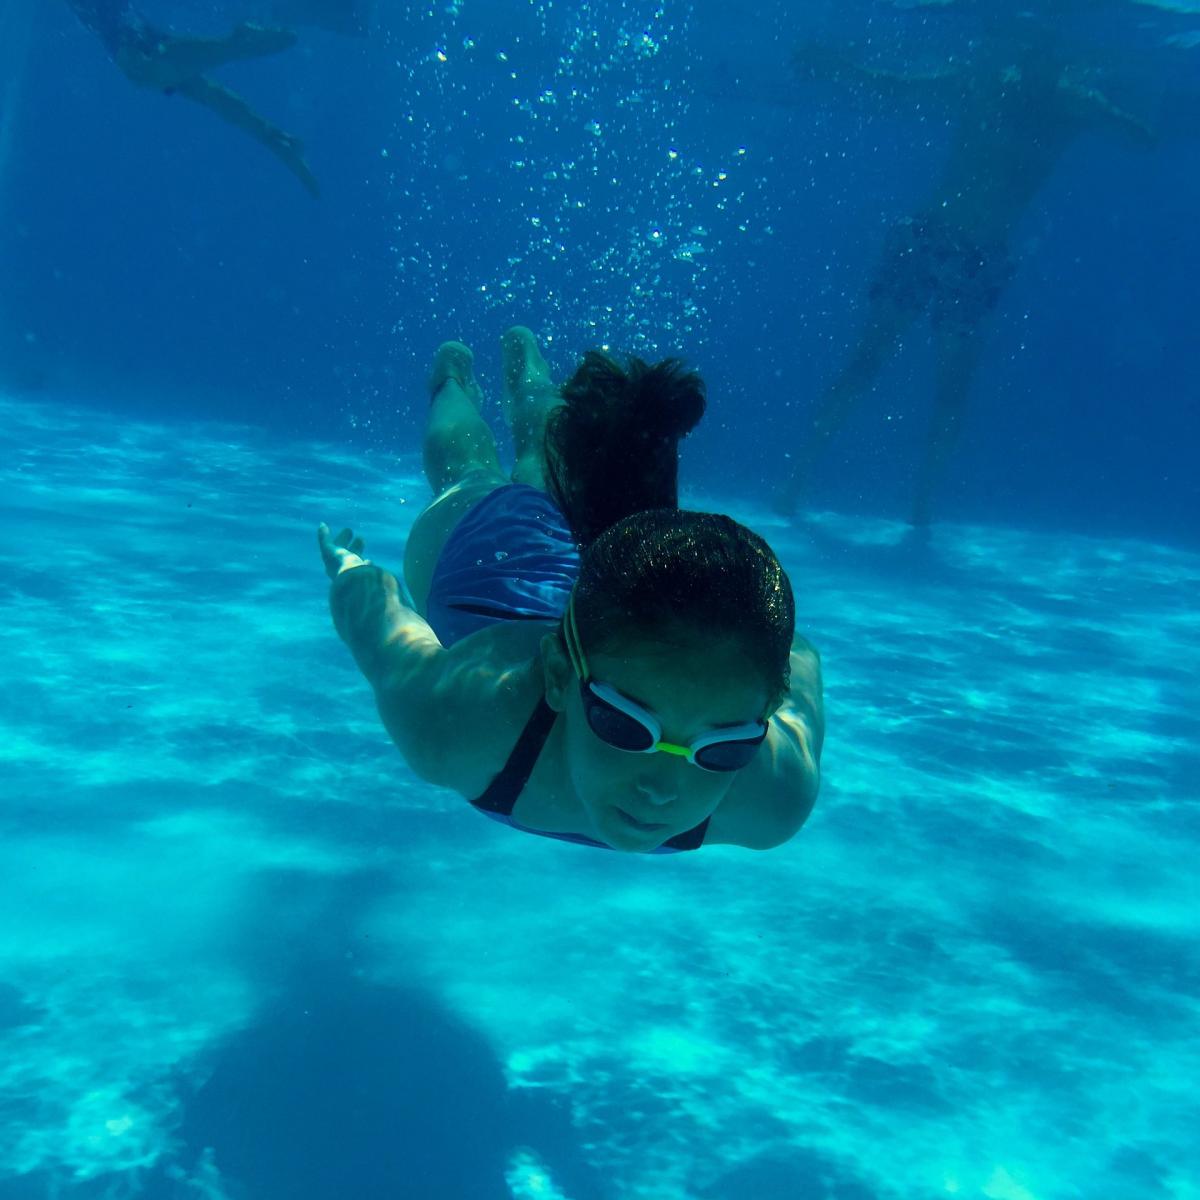 child swimming under water